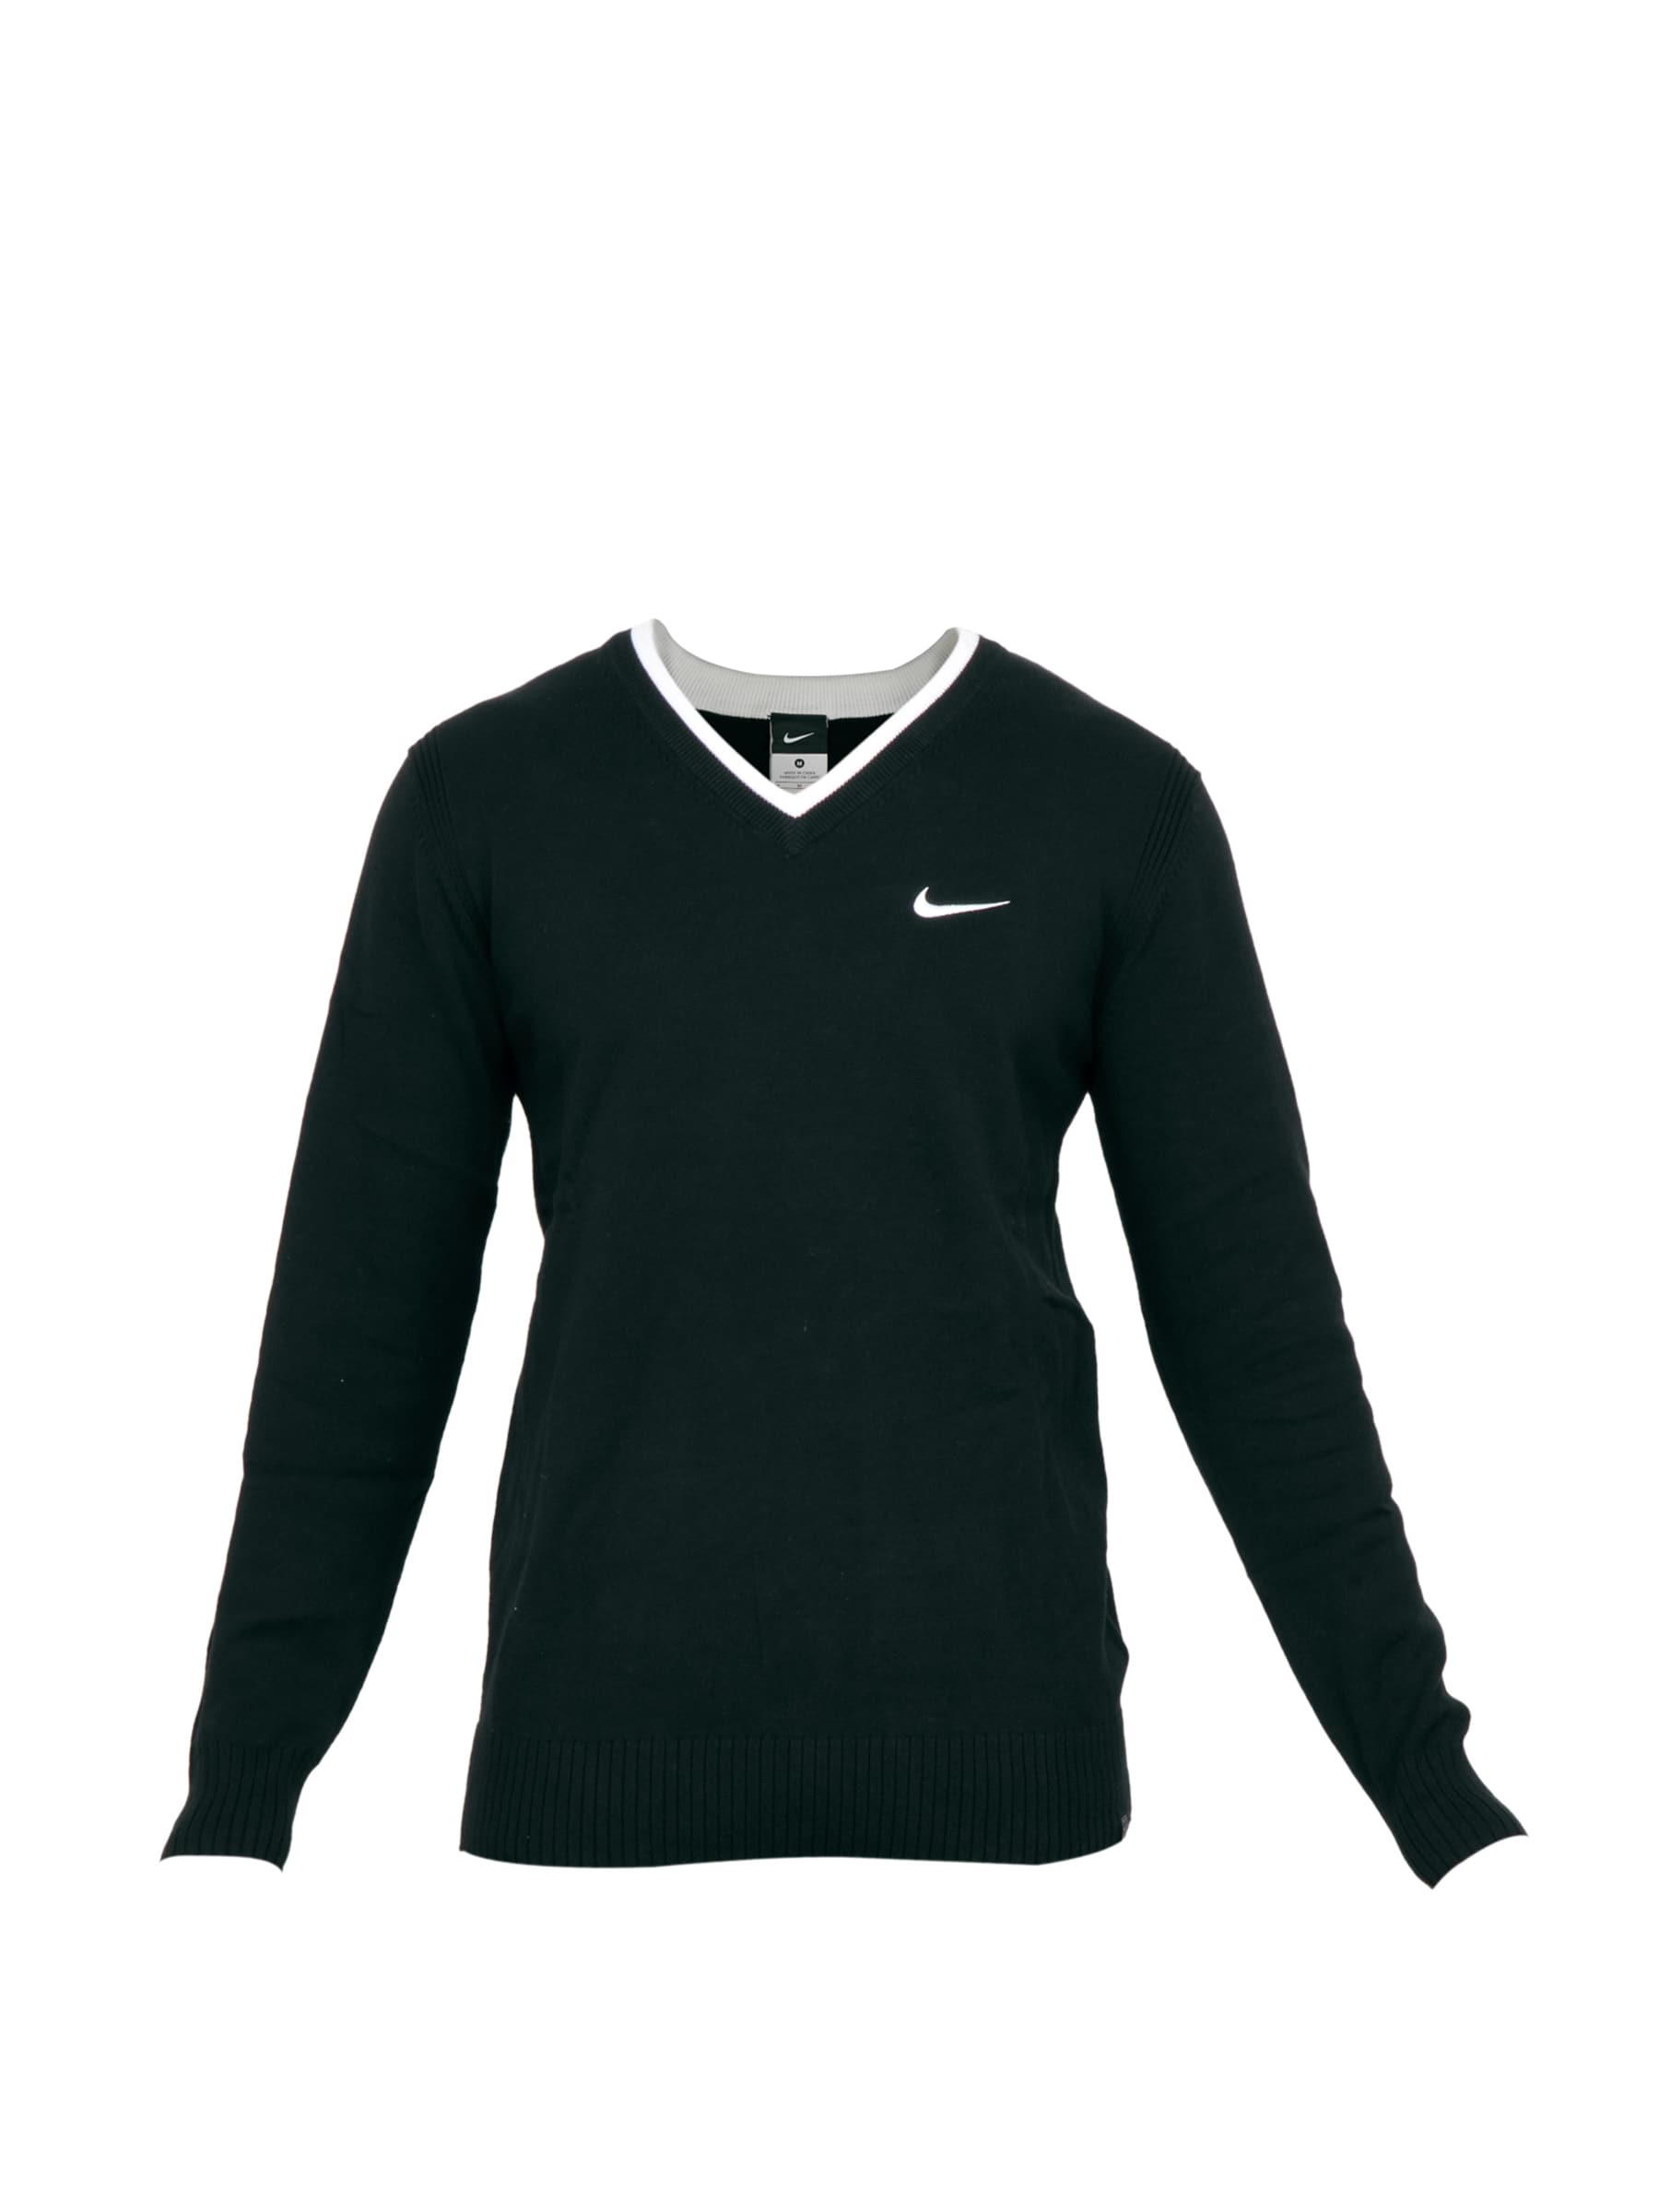 Nike Men Solid Black Sweater